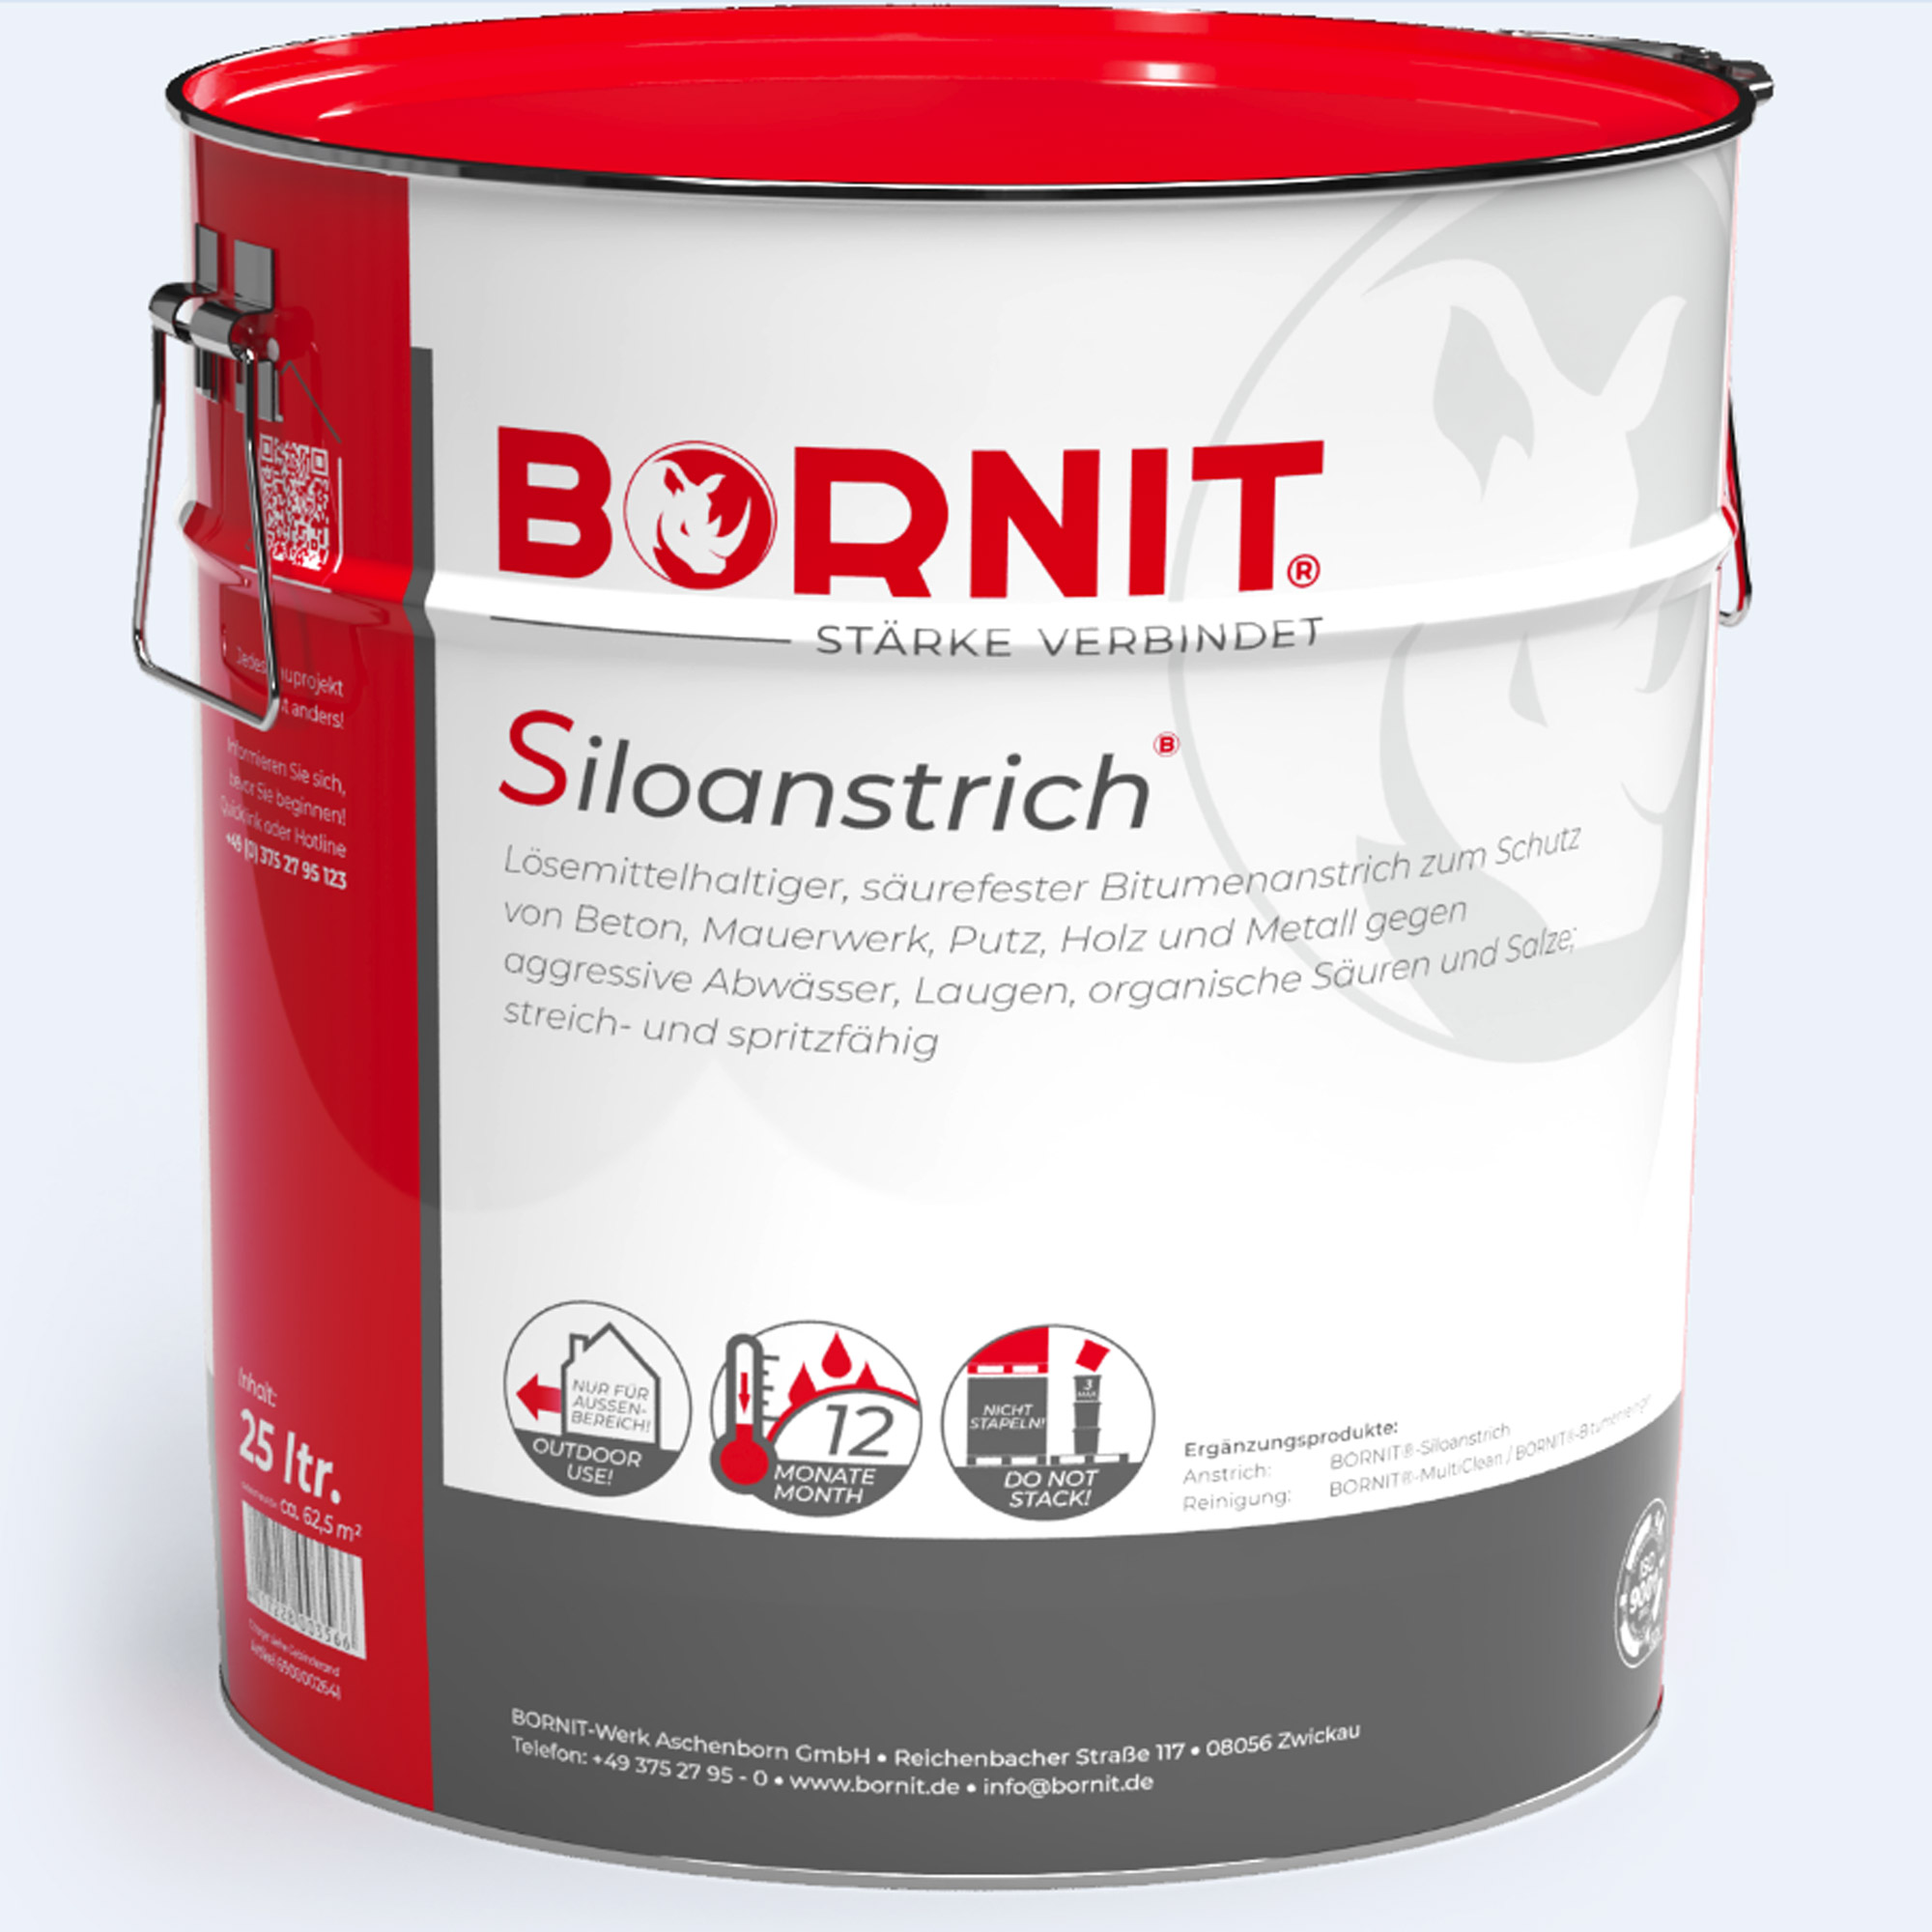 BORNIT Siloanstrich - Bitumen Schutzanstrich, Silolack